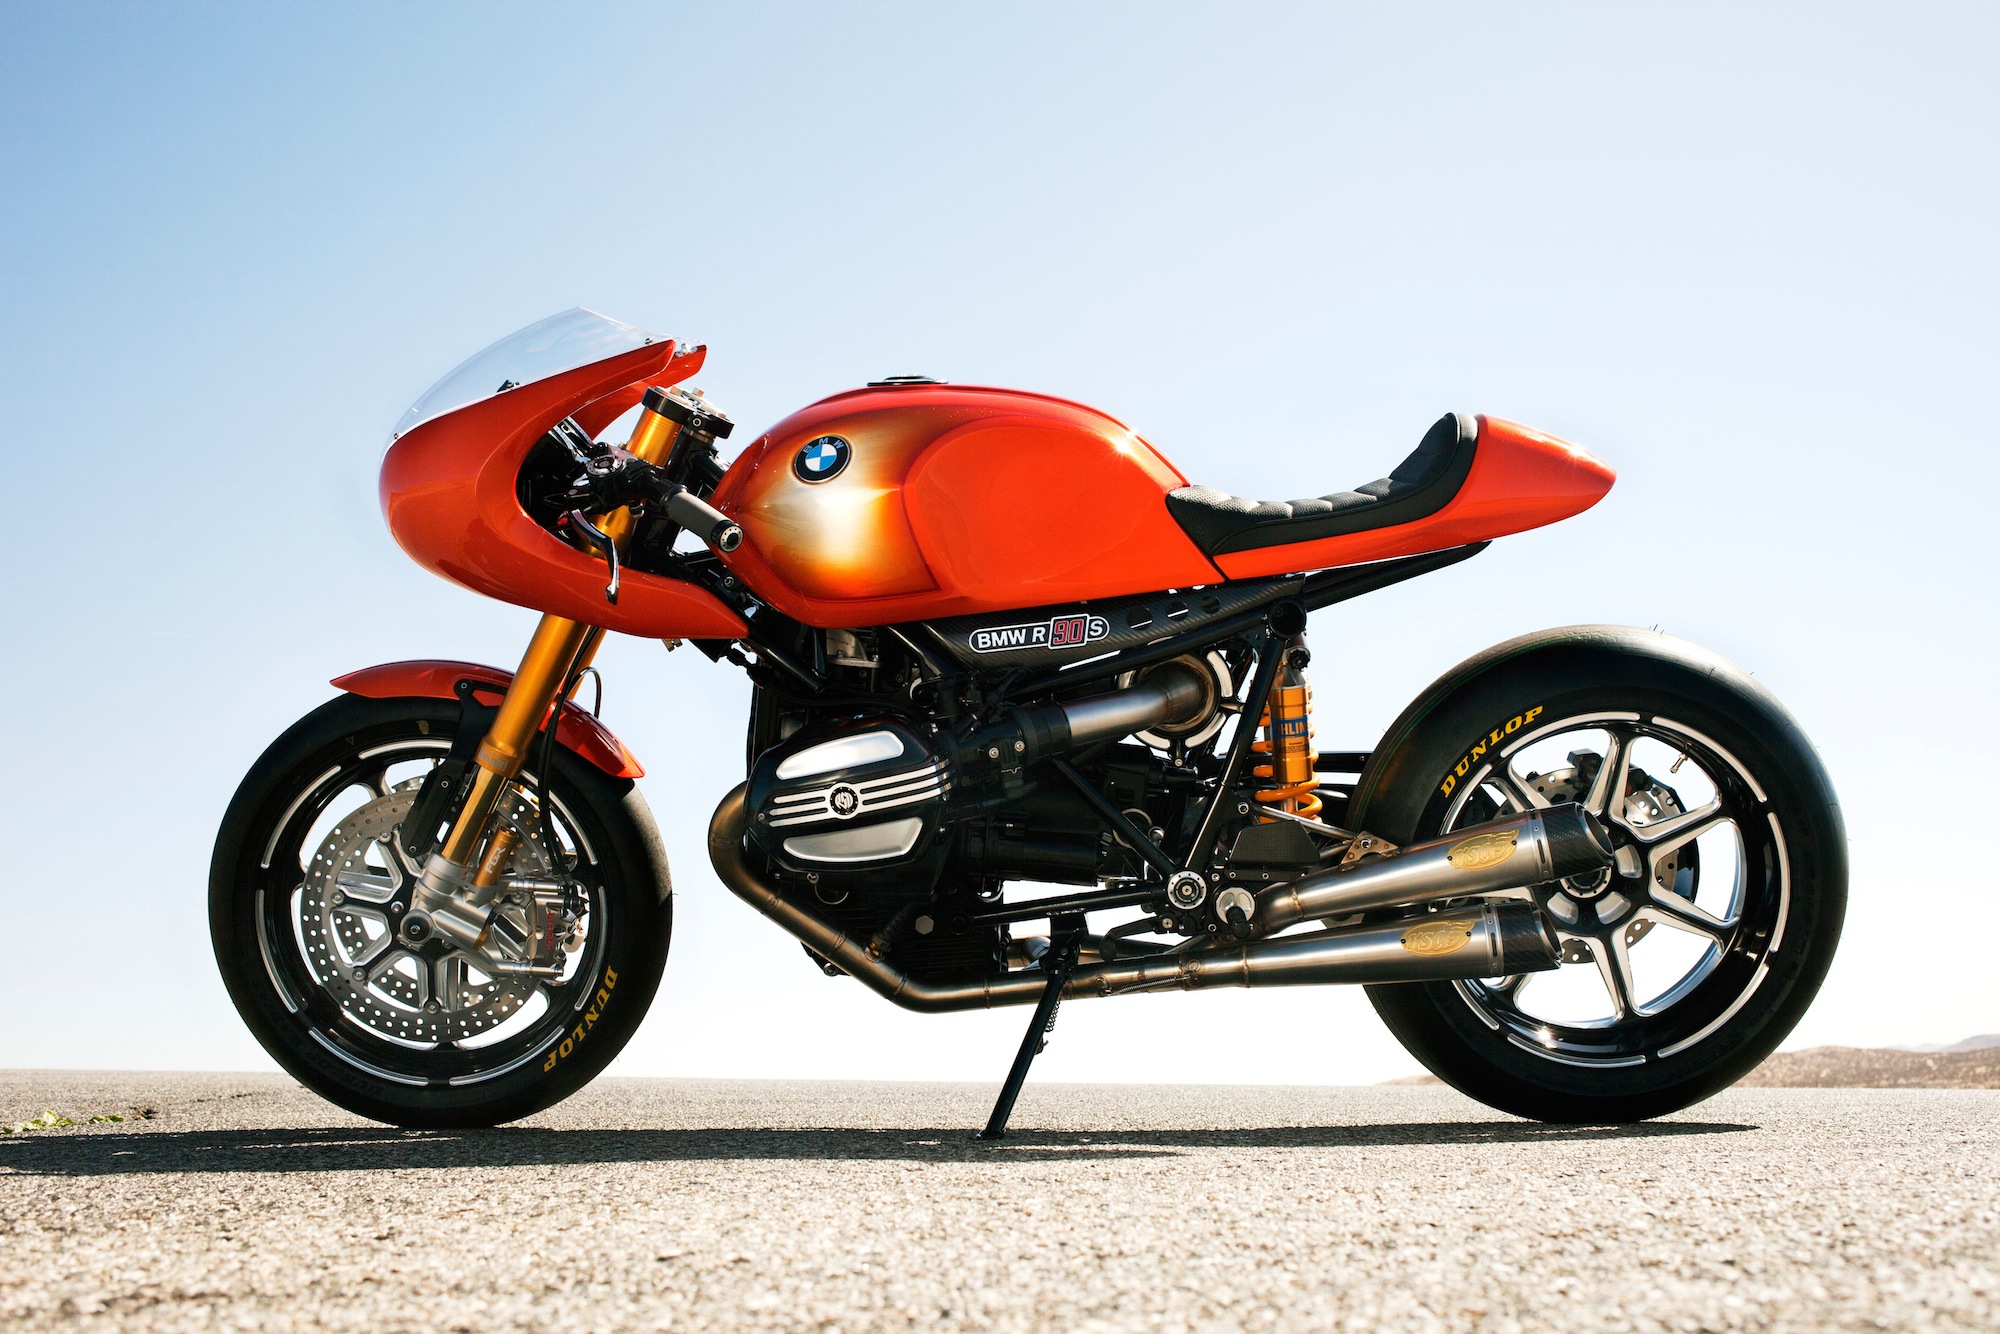 BMW Concept Ninety motorcycle awards